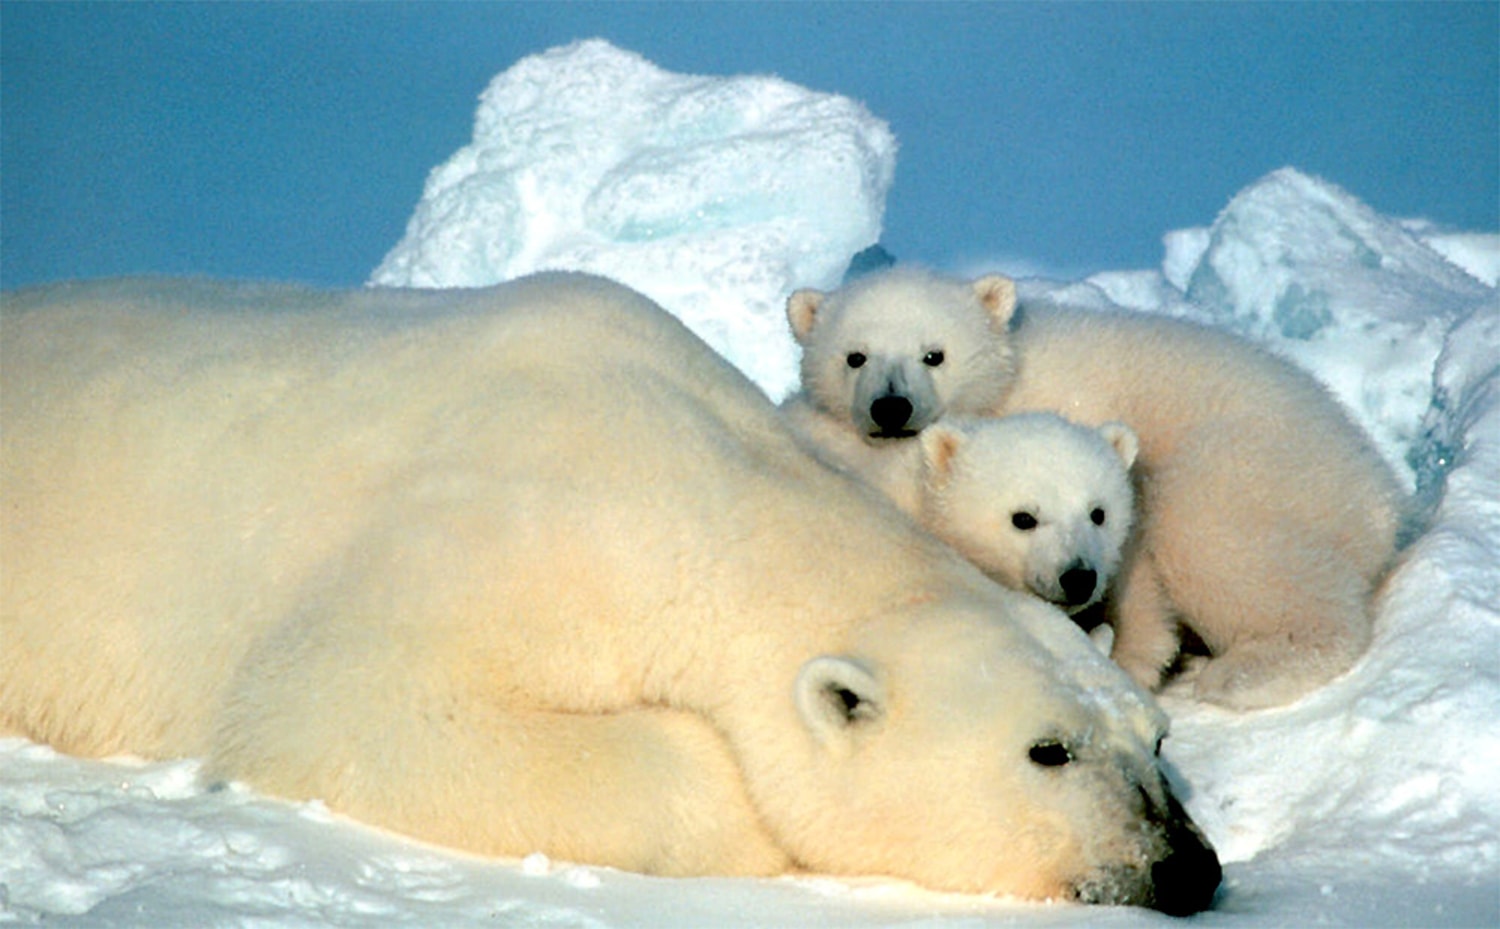 Dark future for white animals in warm Arctic